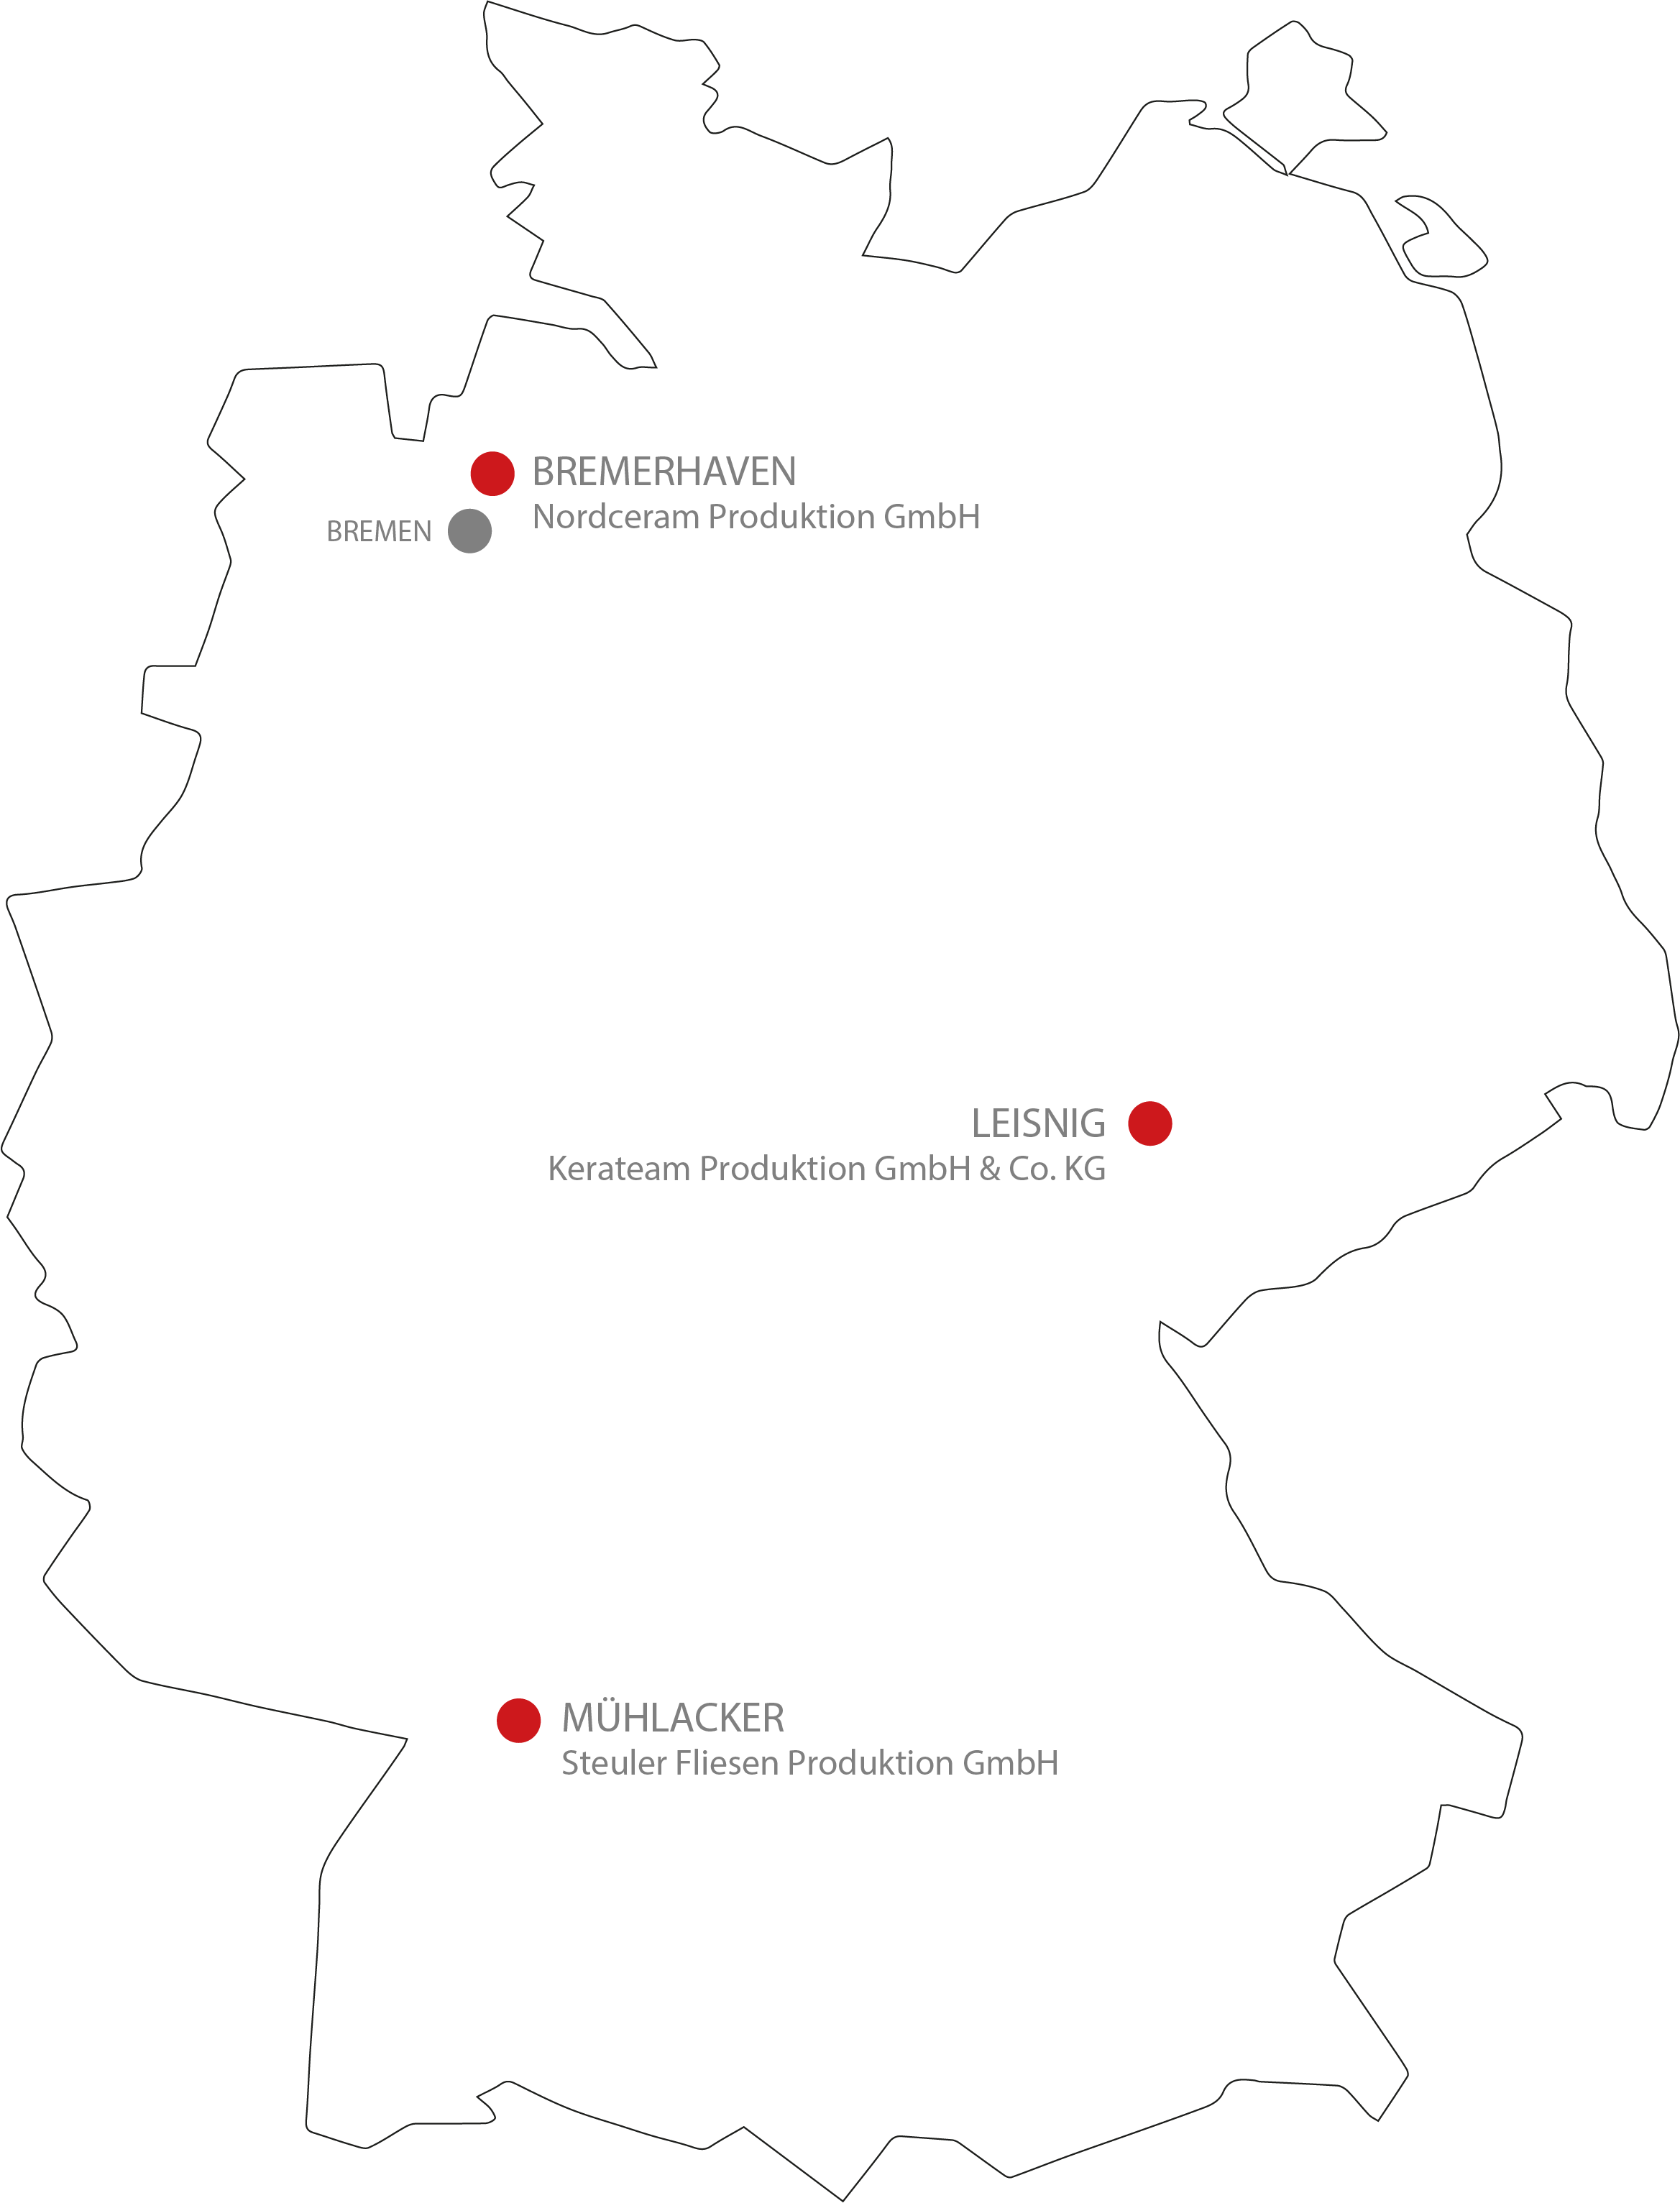 tile factories of Steuler Fliesengruppe